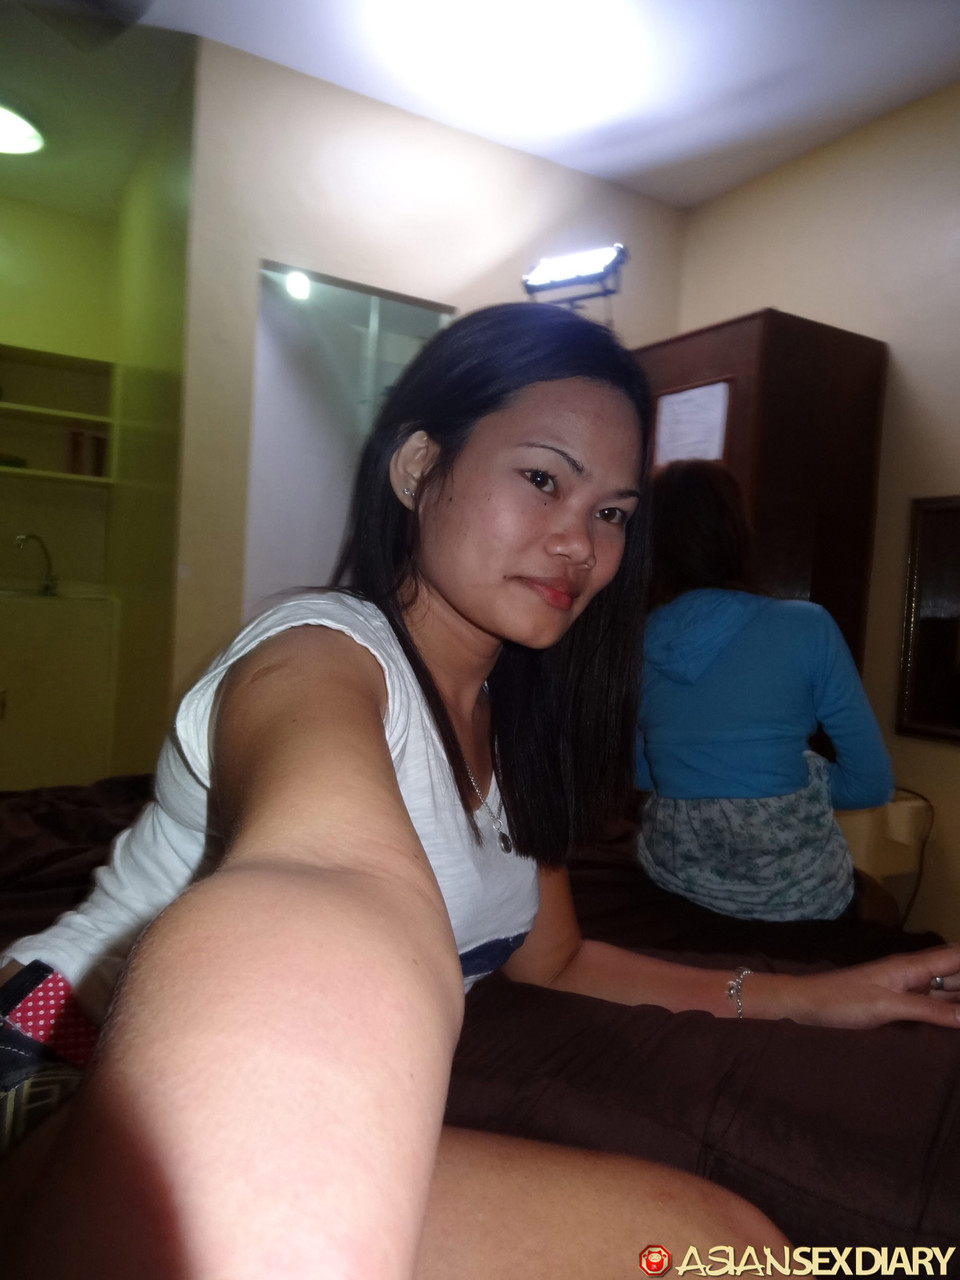 Horny Asian girls take selfies and fuck lucky tourist while enjoying free AC porn photo #422594962 | Asian Sex Diary Pics, Leann, Irish, Selfie, mobile porn